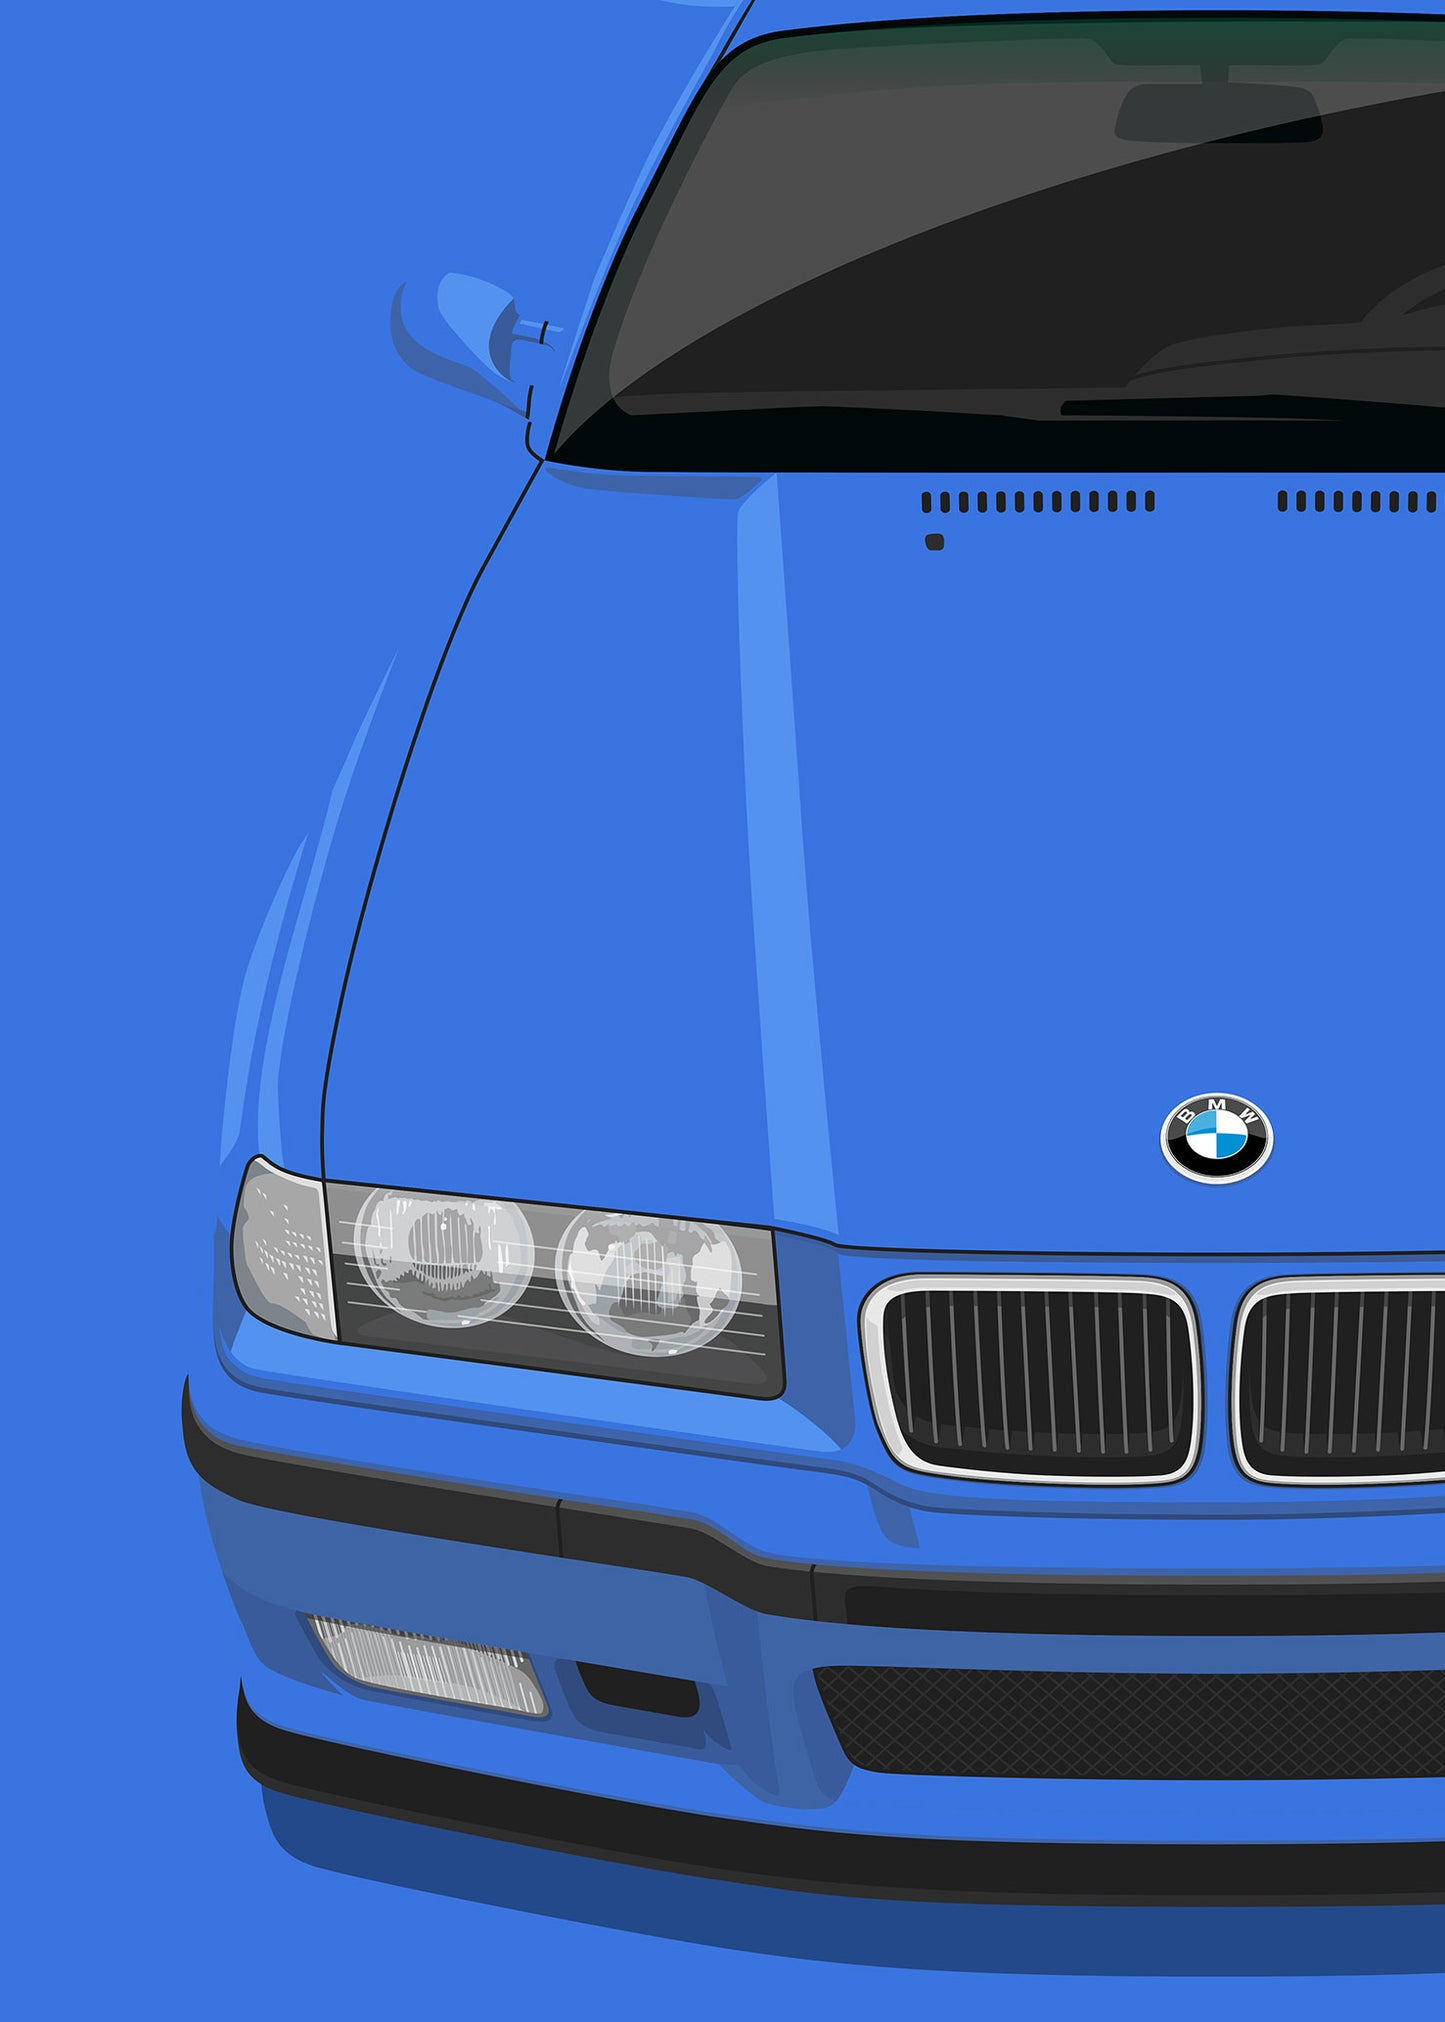 1996 BMW E36 M3 Evolution Estoril Blue - poster print